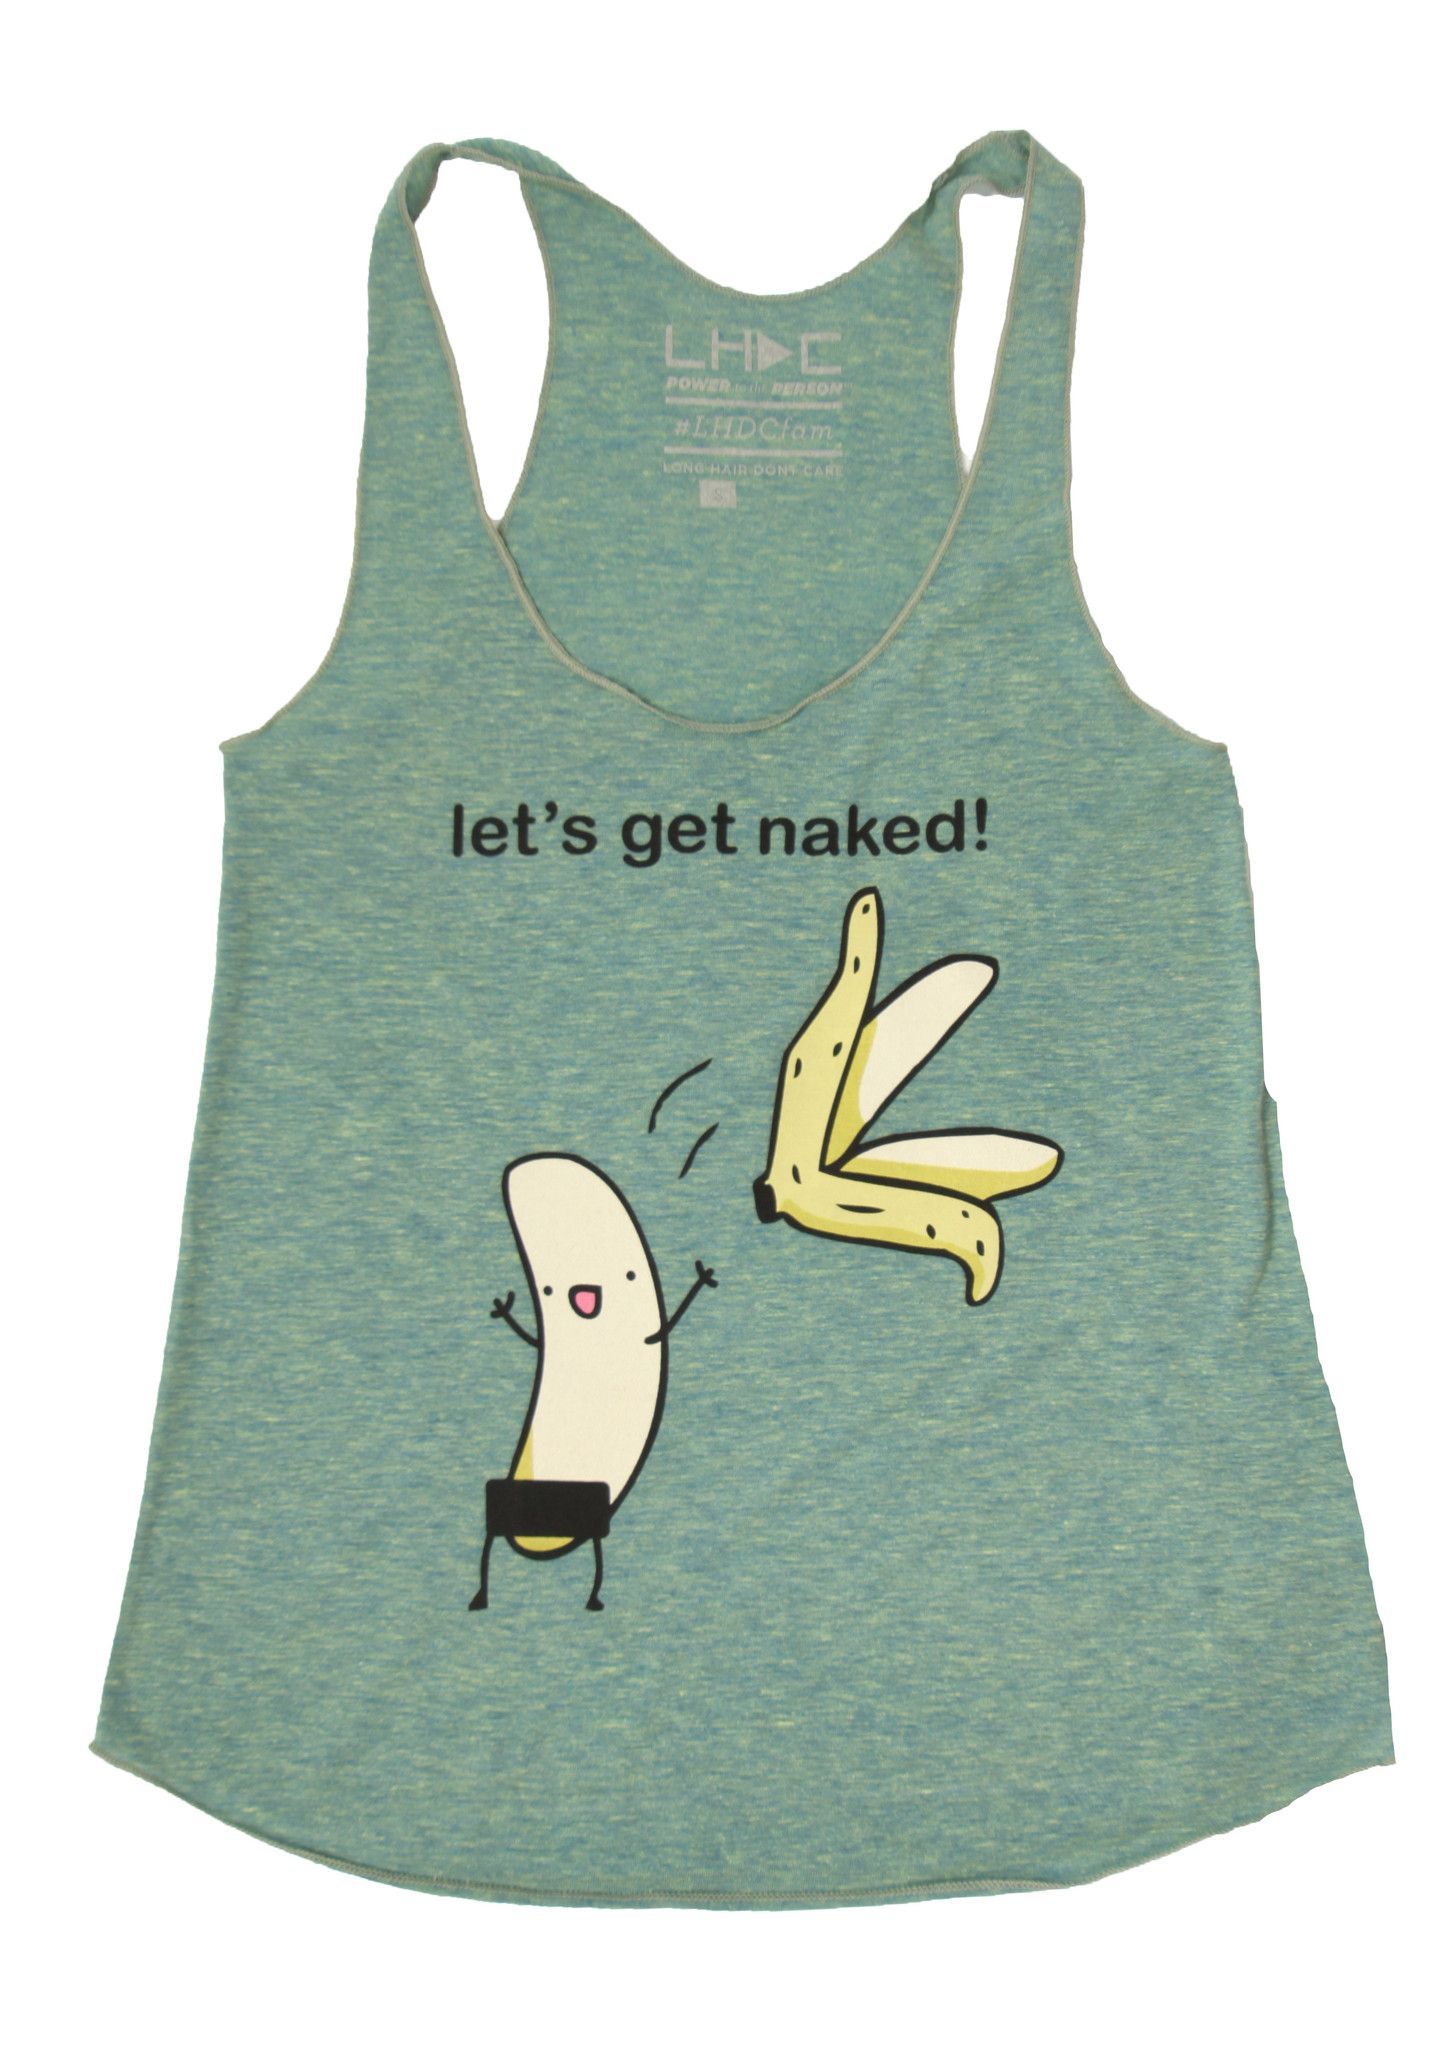 Lets get naked tanktop – LHDC Clothing